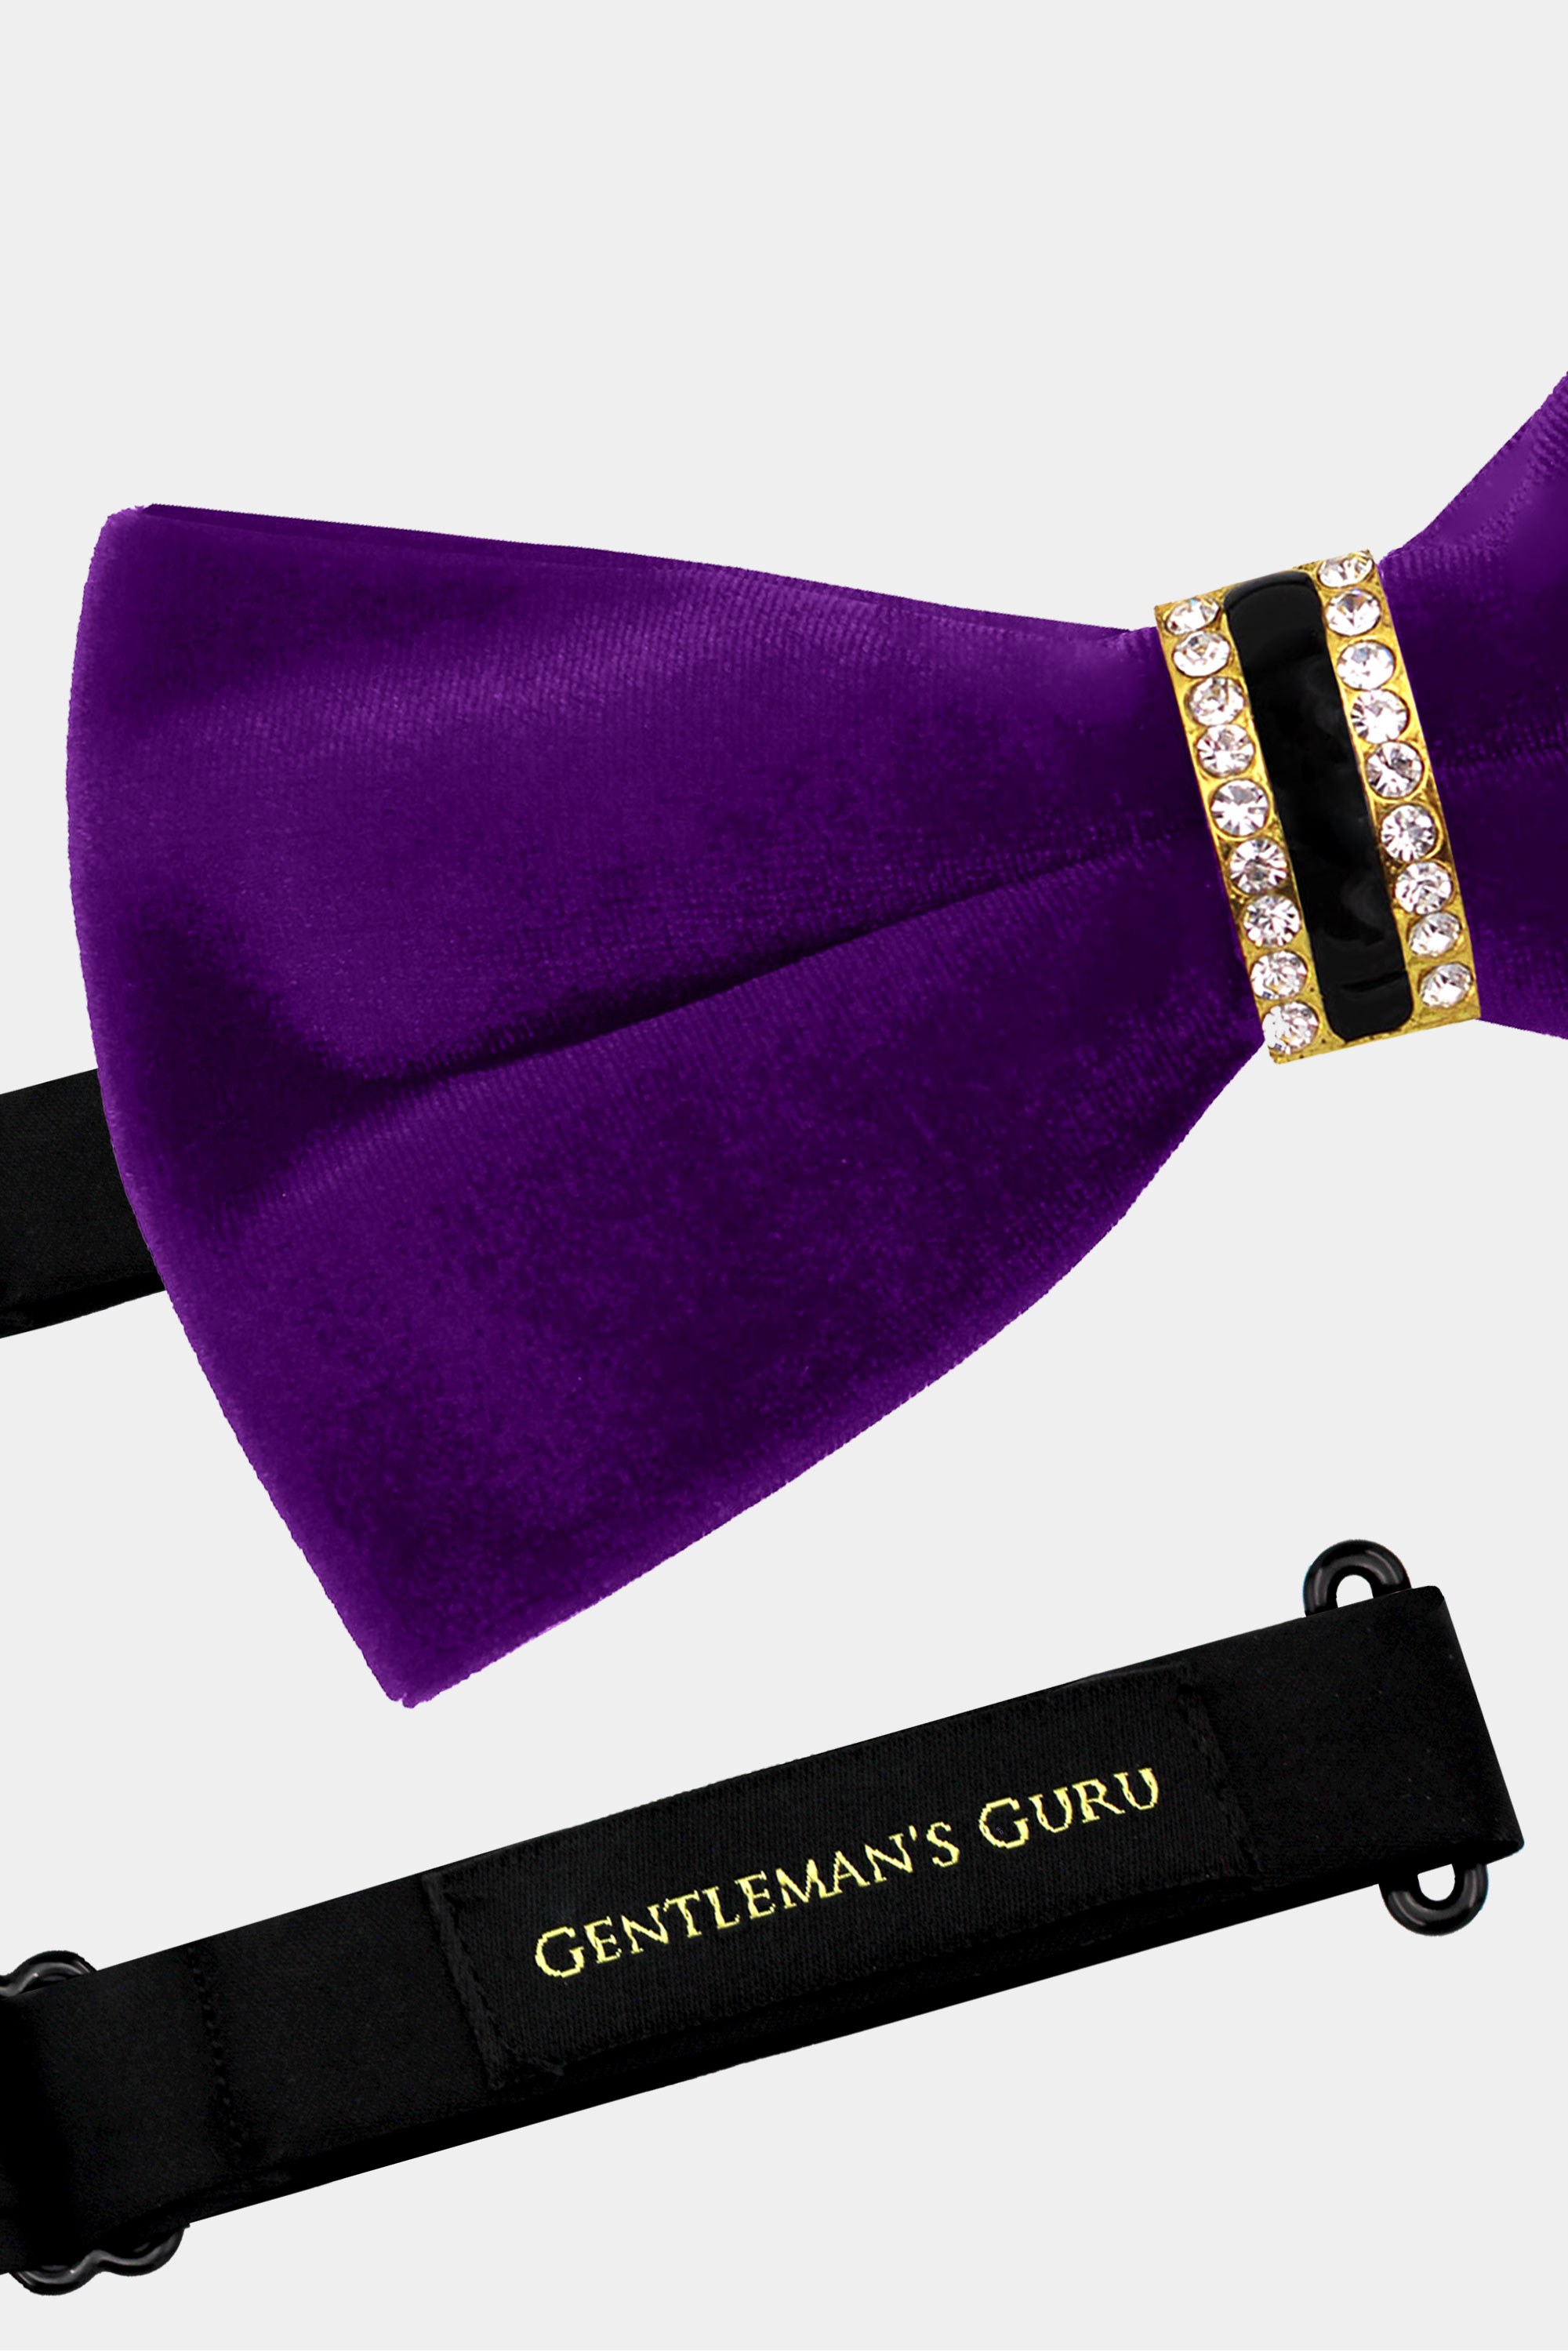 Crystal-Purple-Velvet-Bow-Tie-from-Gentlemansguru.com